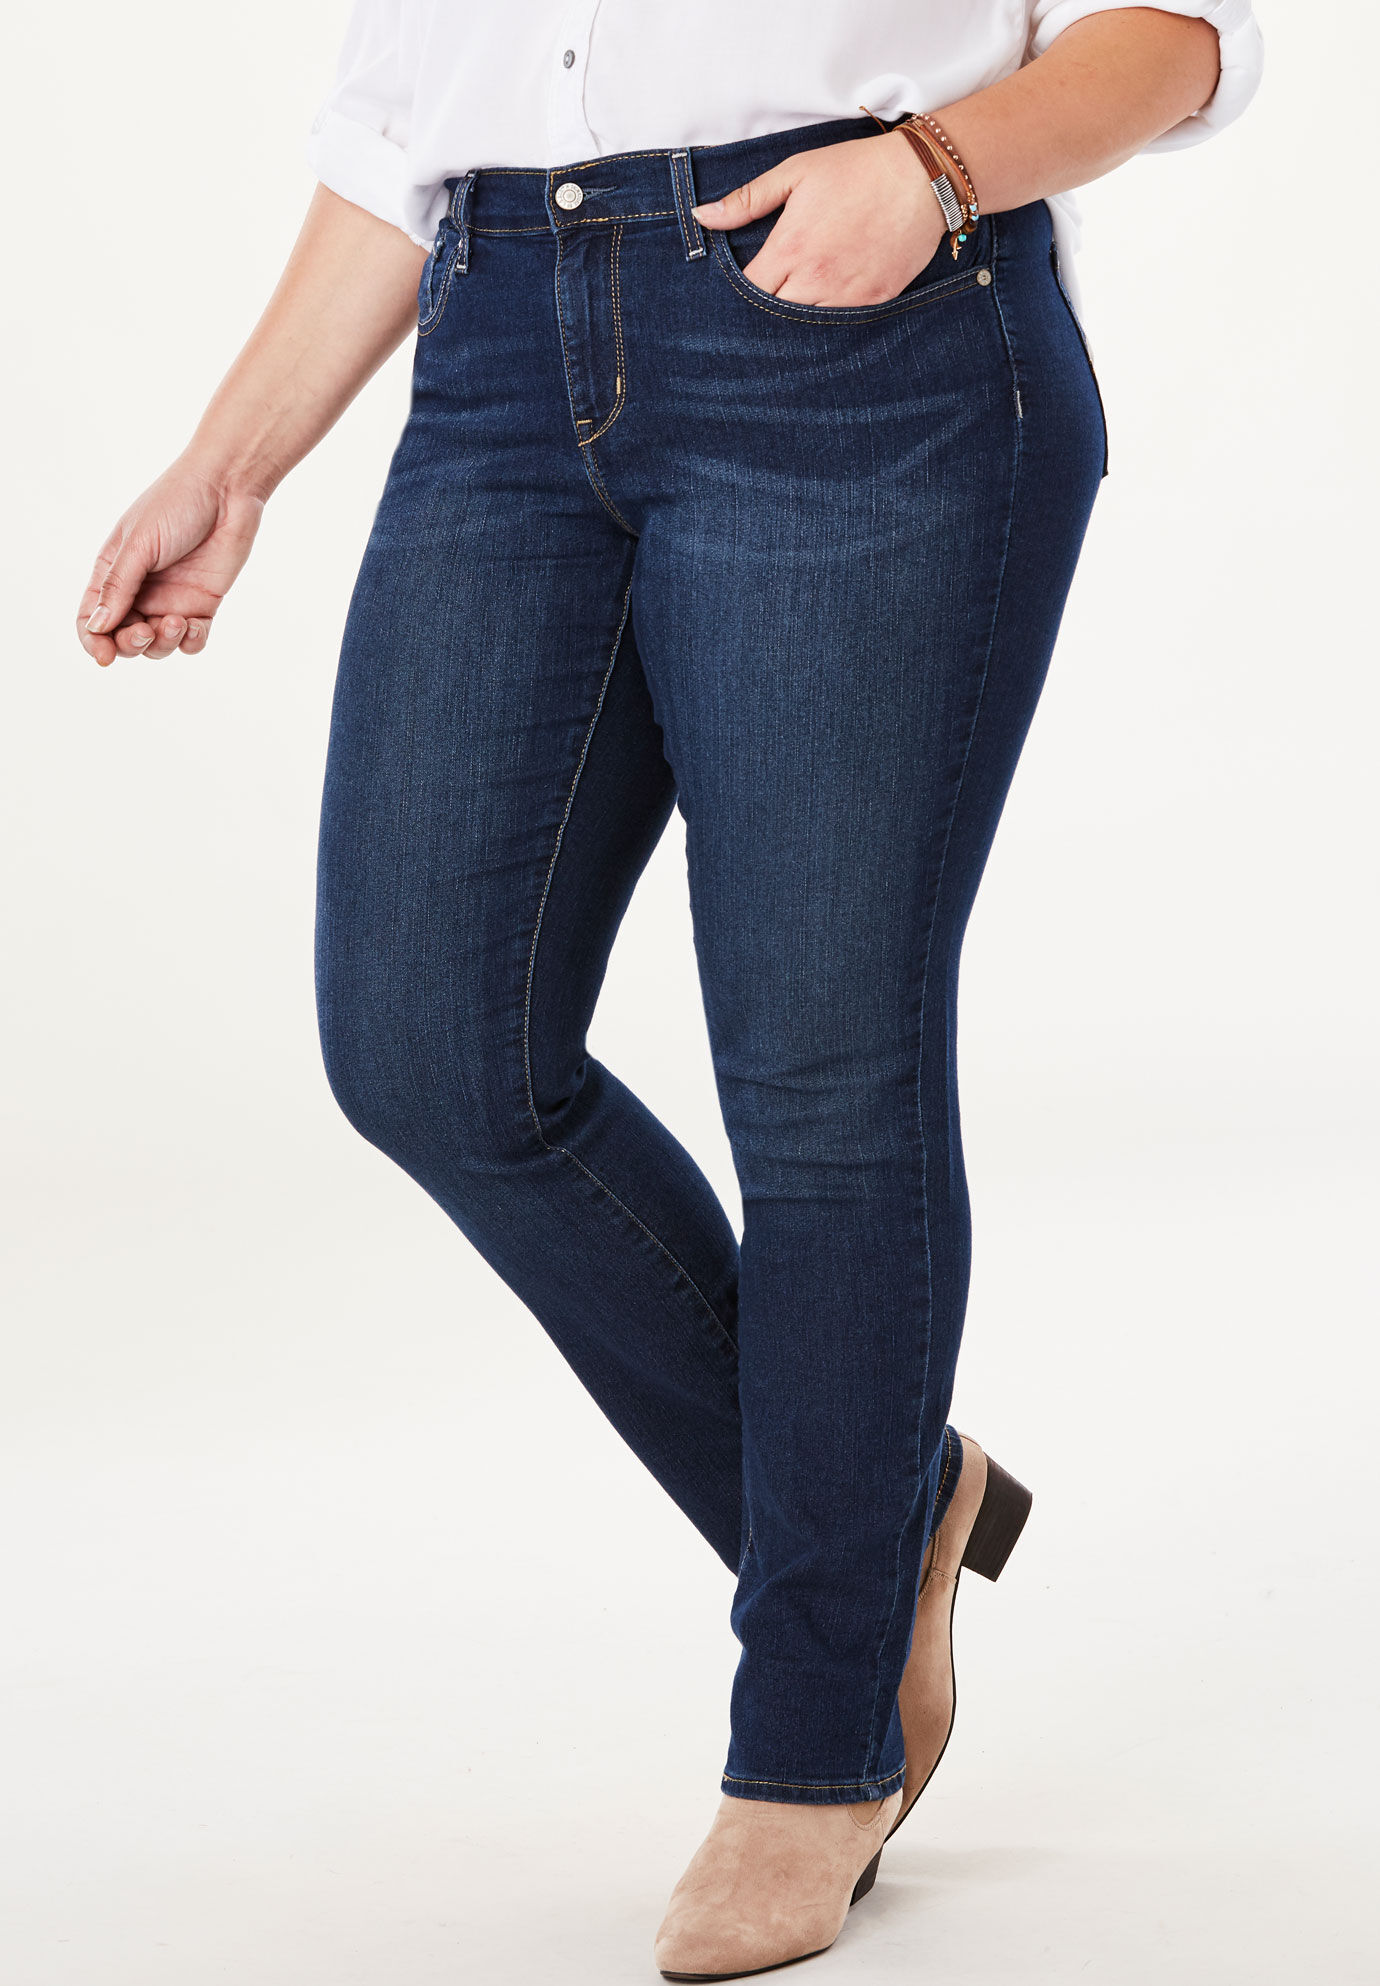 signature levi strauss women's jeans